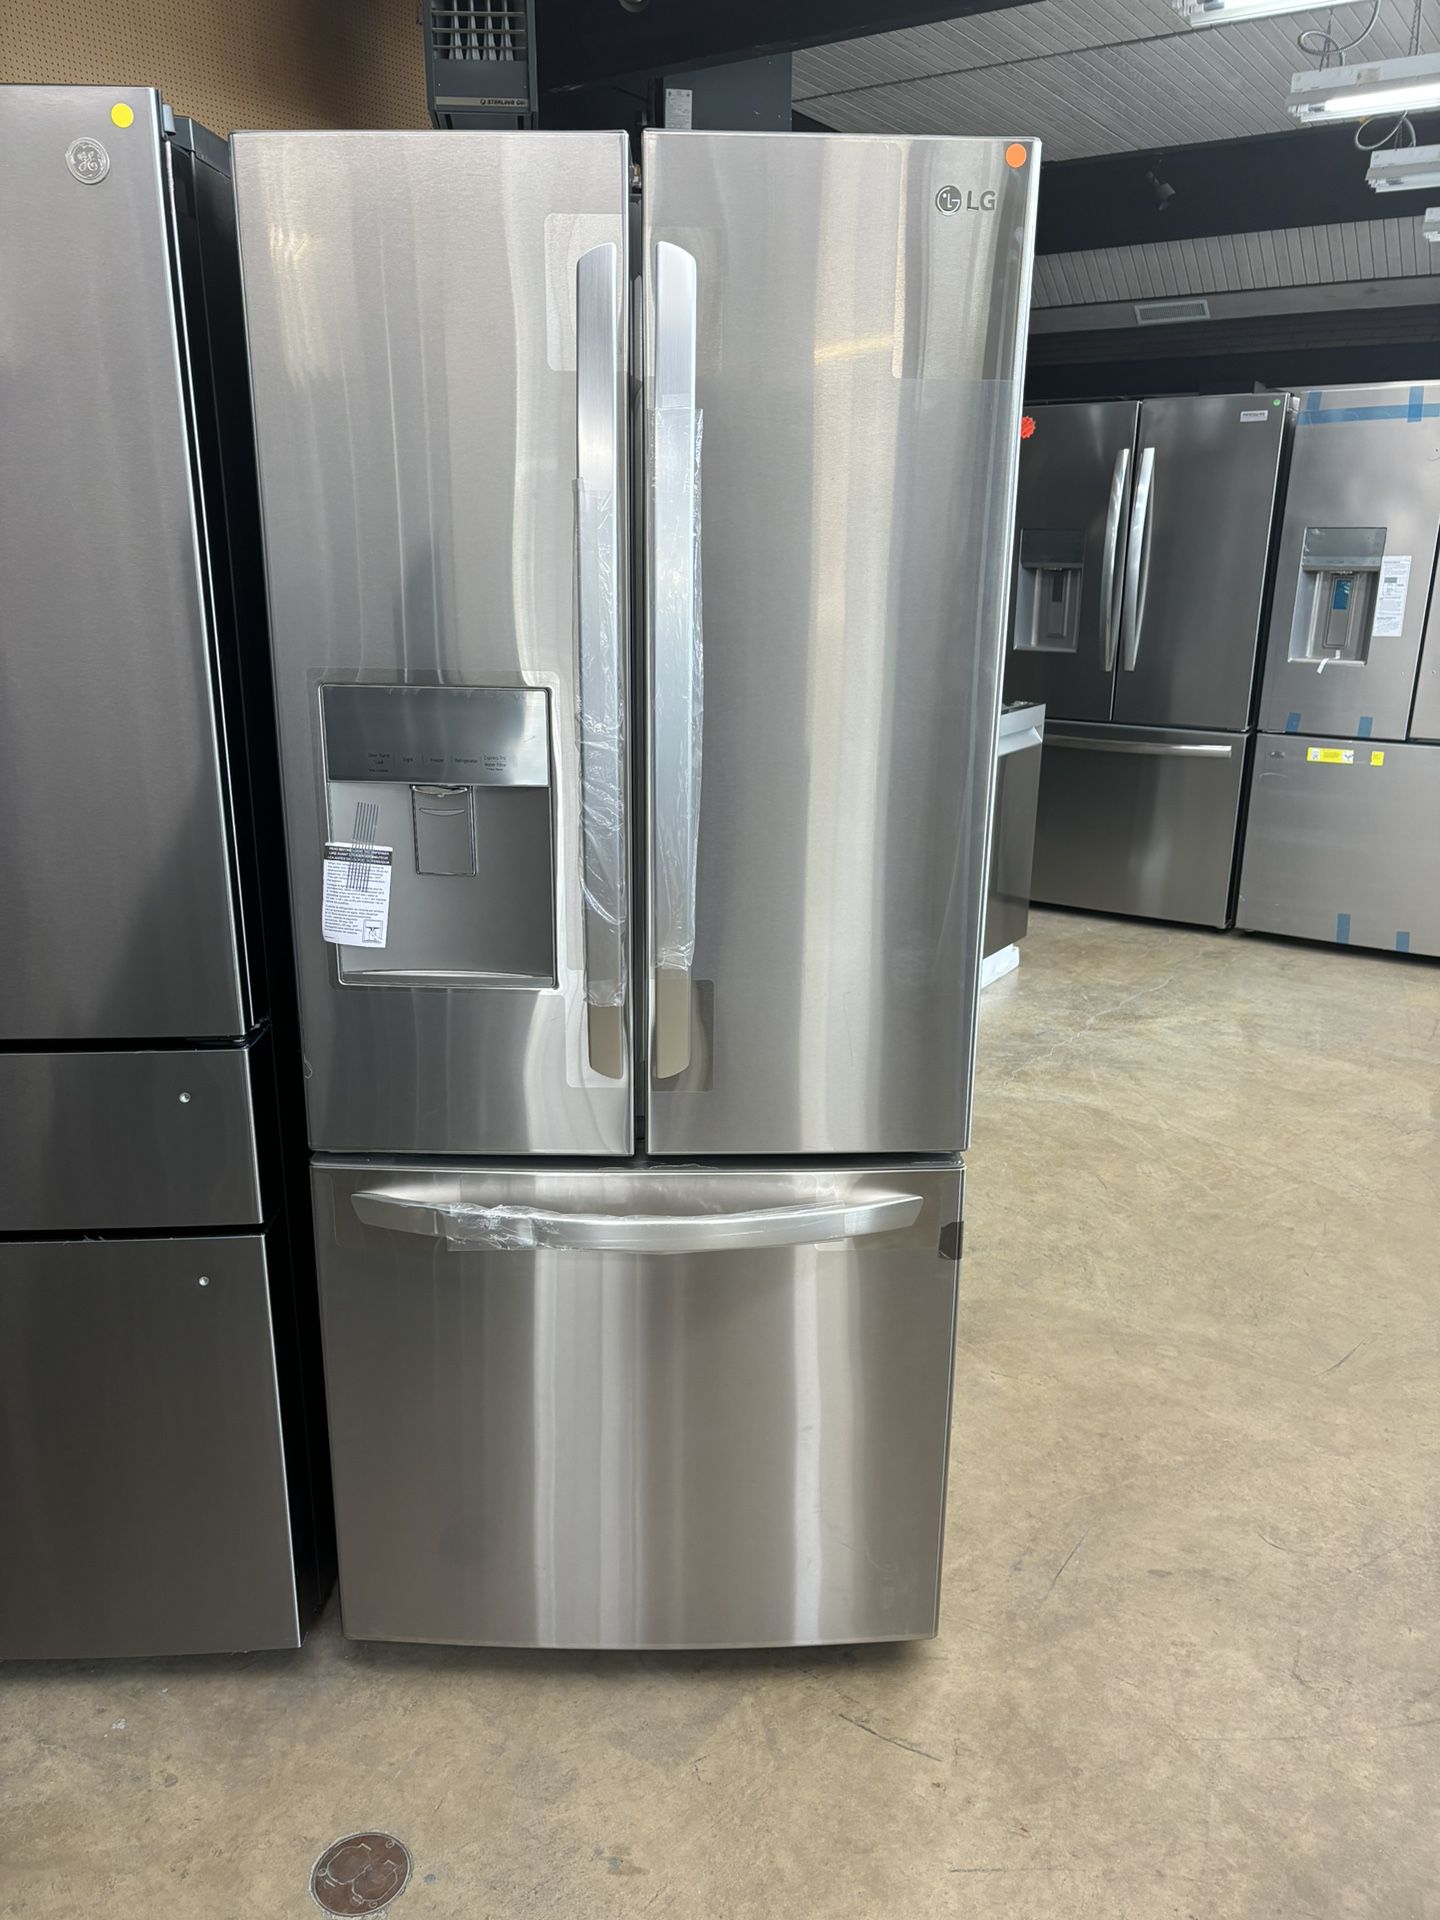 NEW OPEN BOX- LG 30 inch French Door Refrigerator 